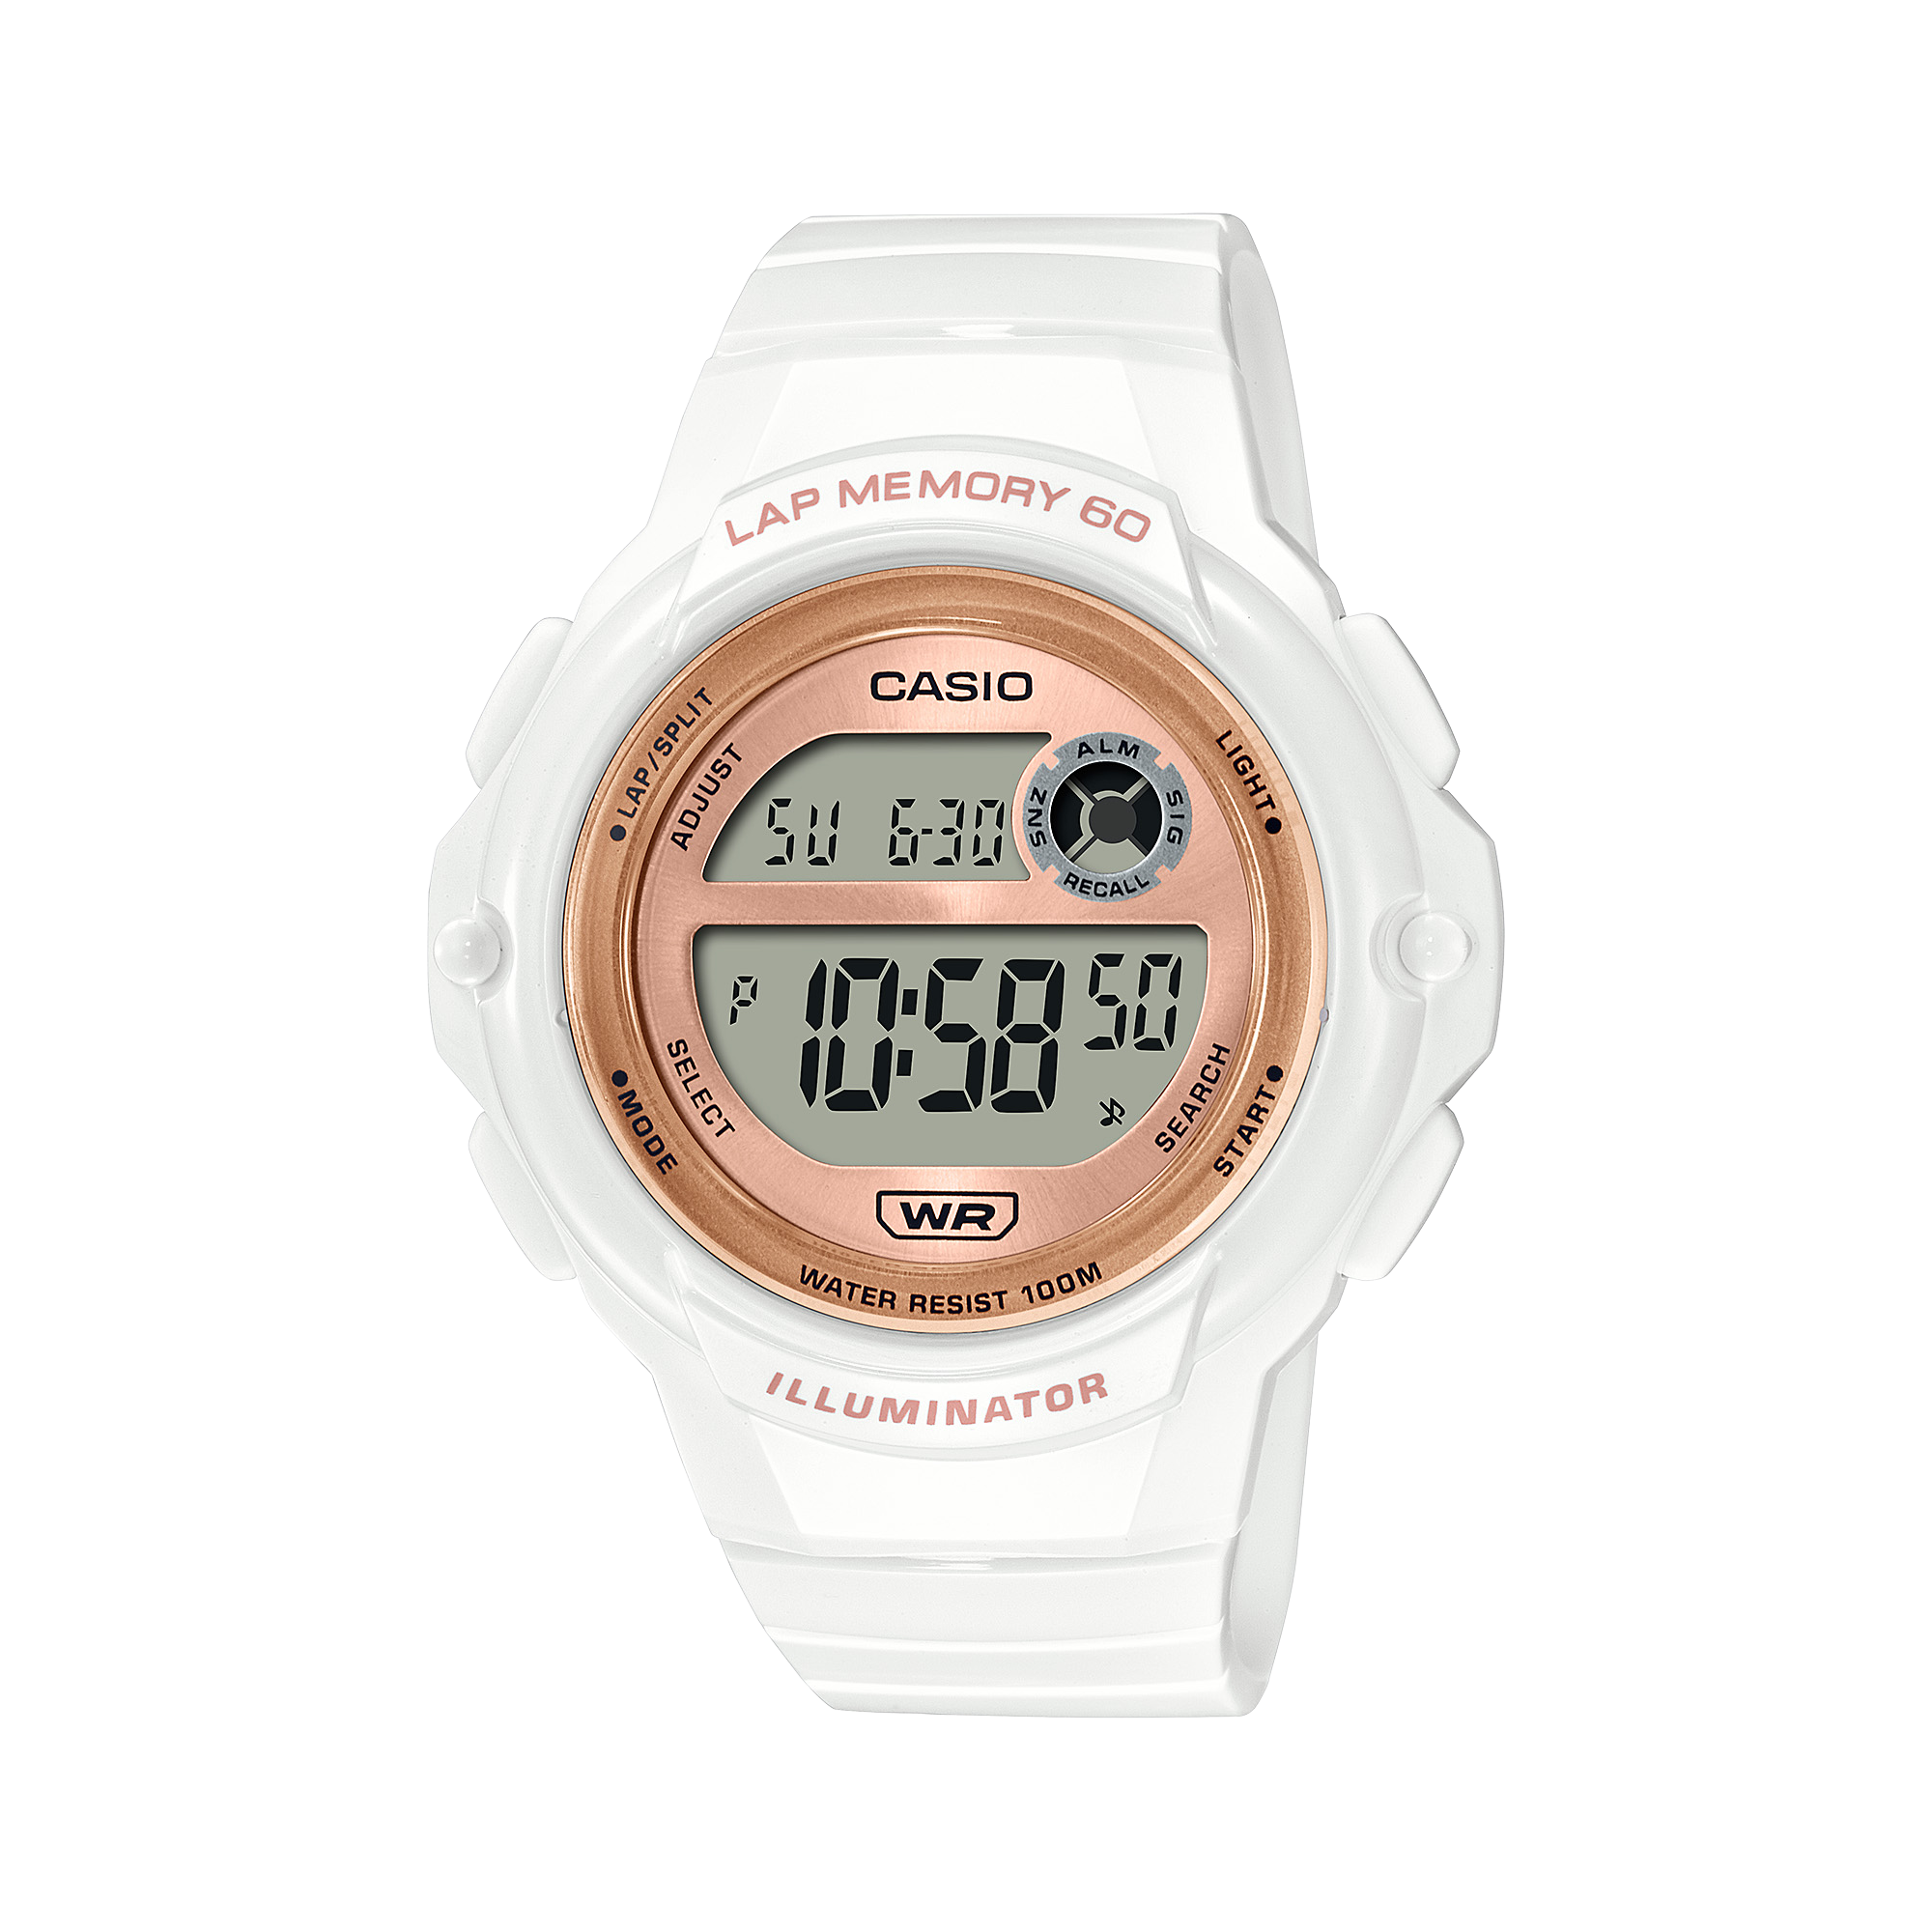 Reloj - CASIO LWS-1200H-7A2VD